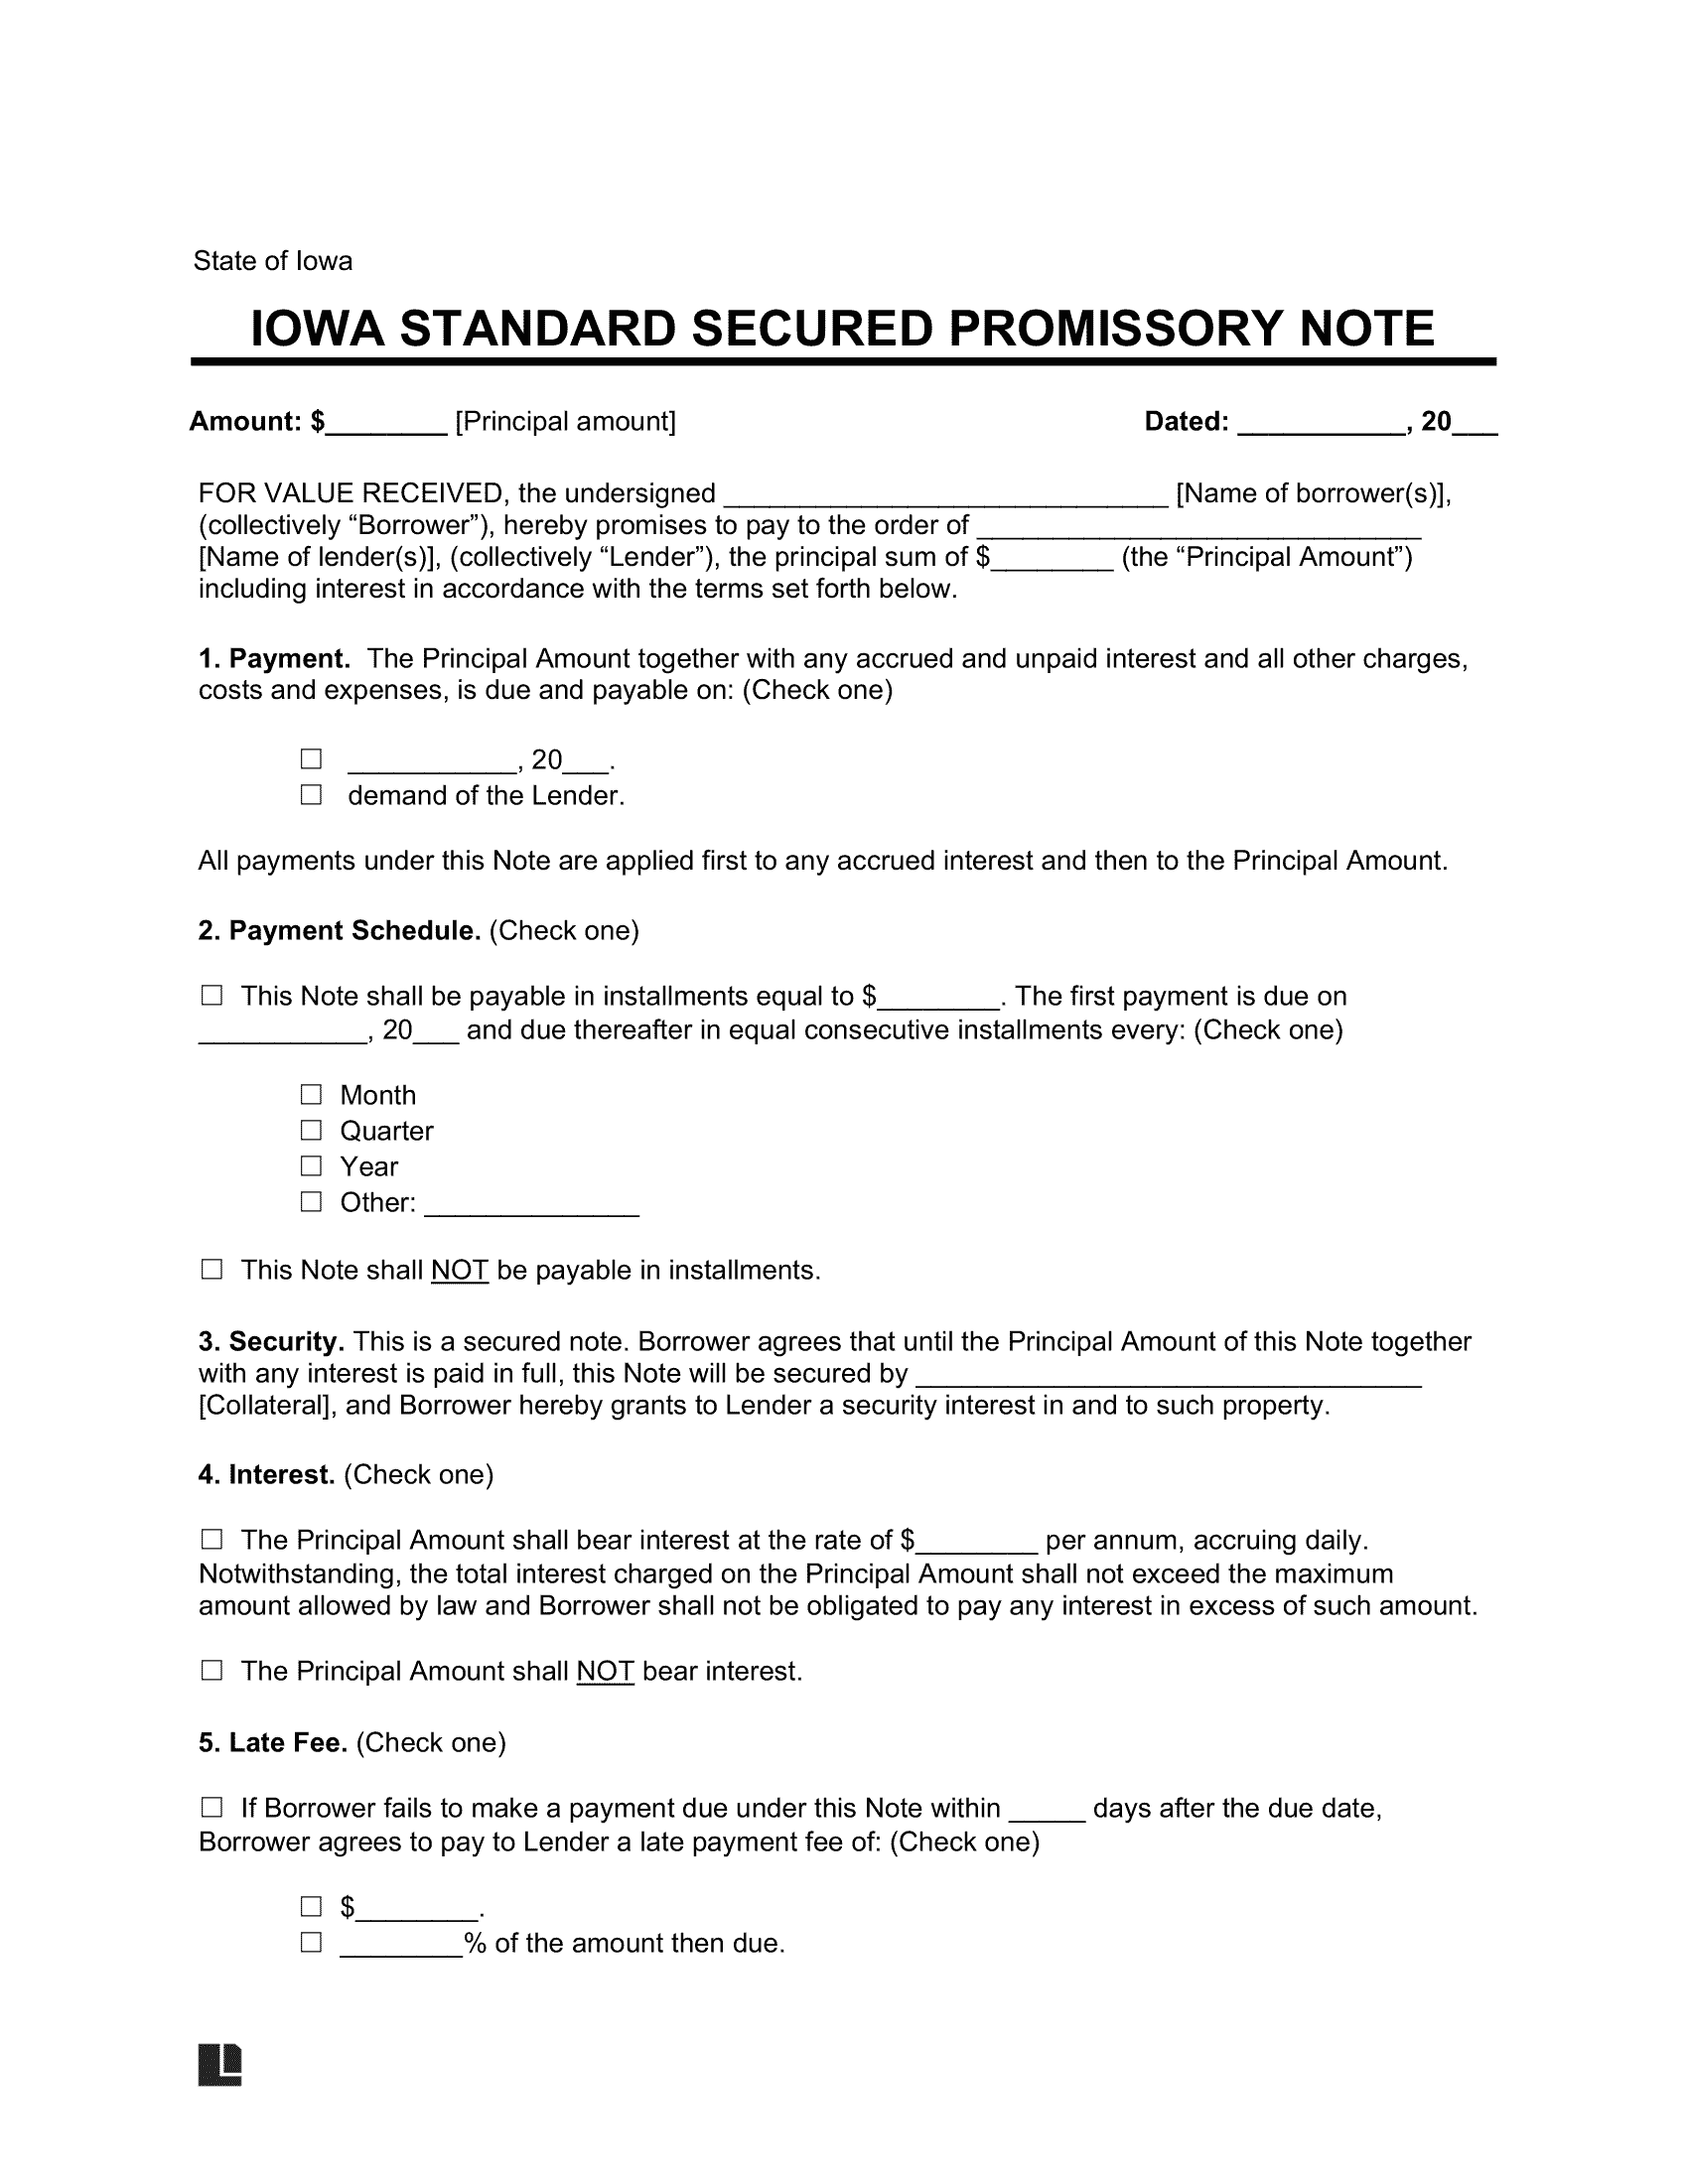 Iowa Standard Secured Promissory Note Template